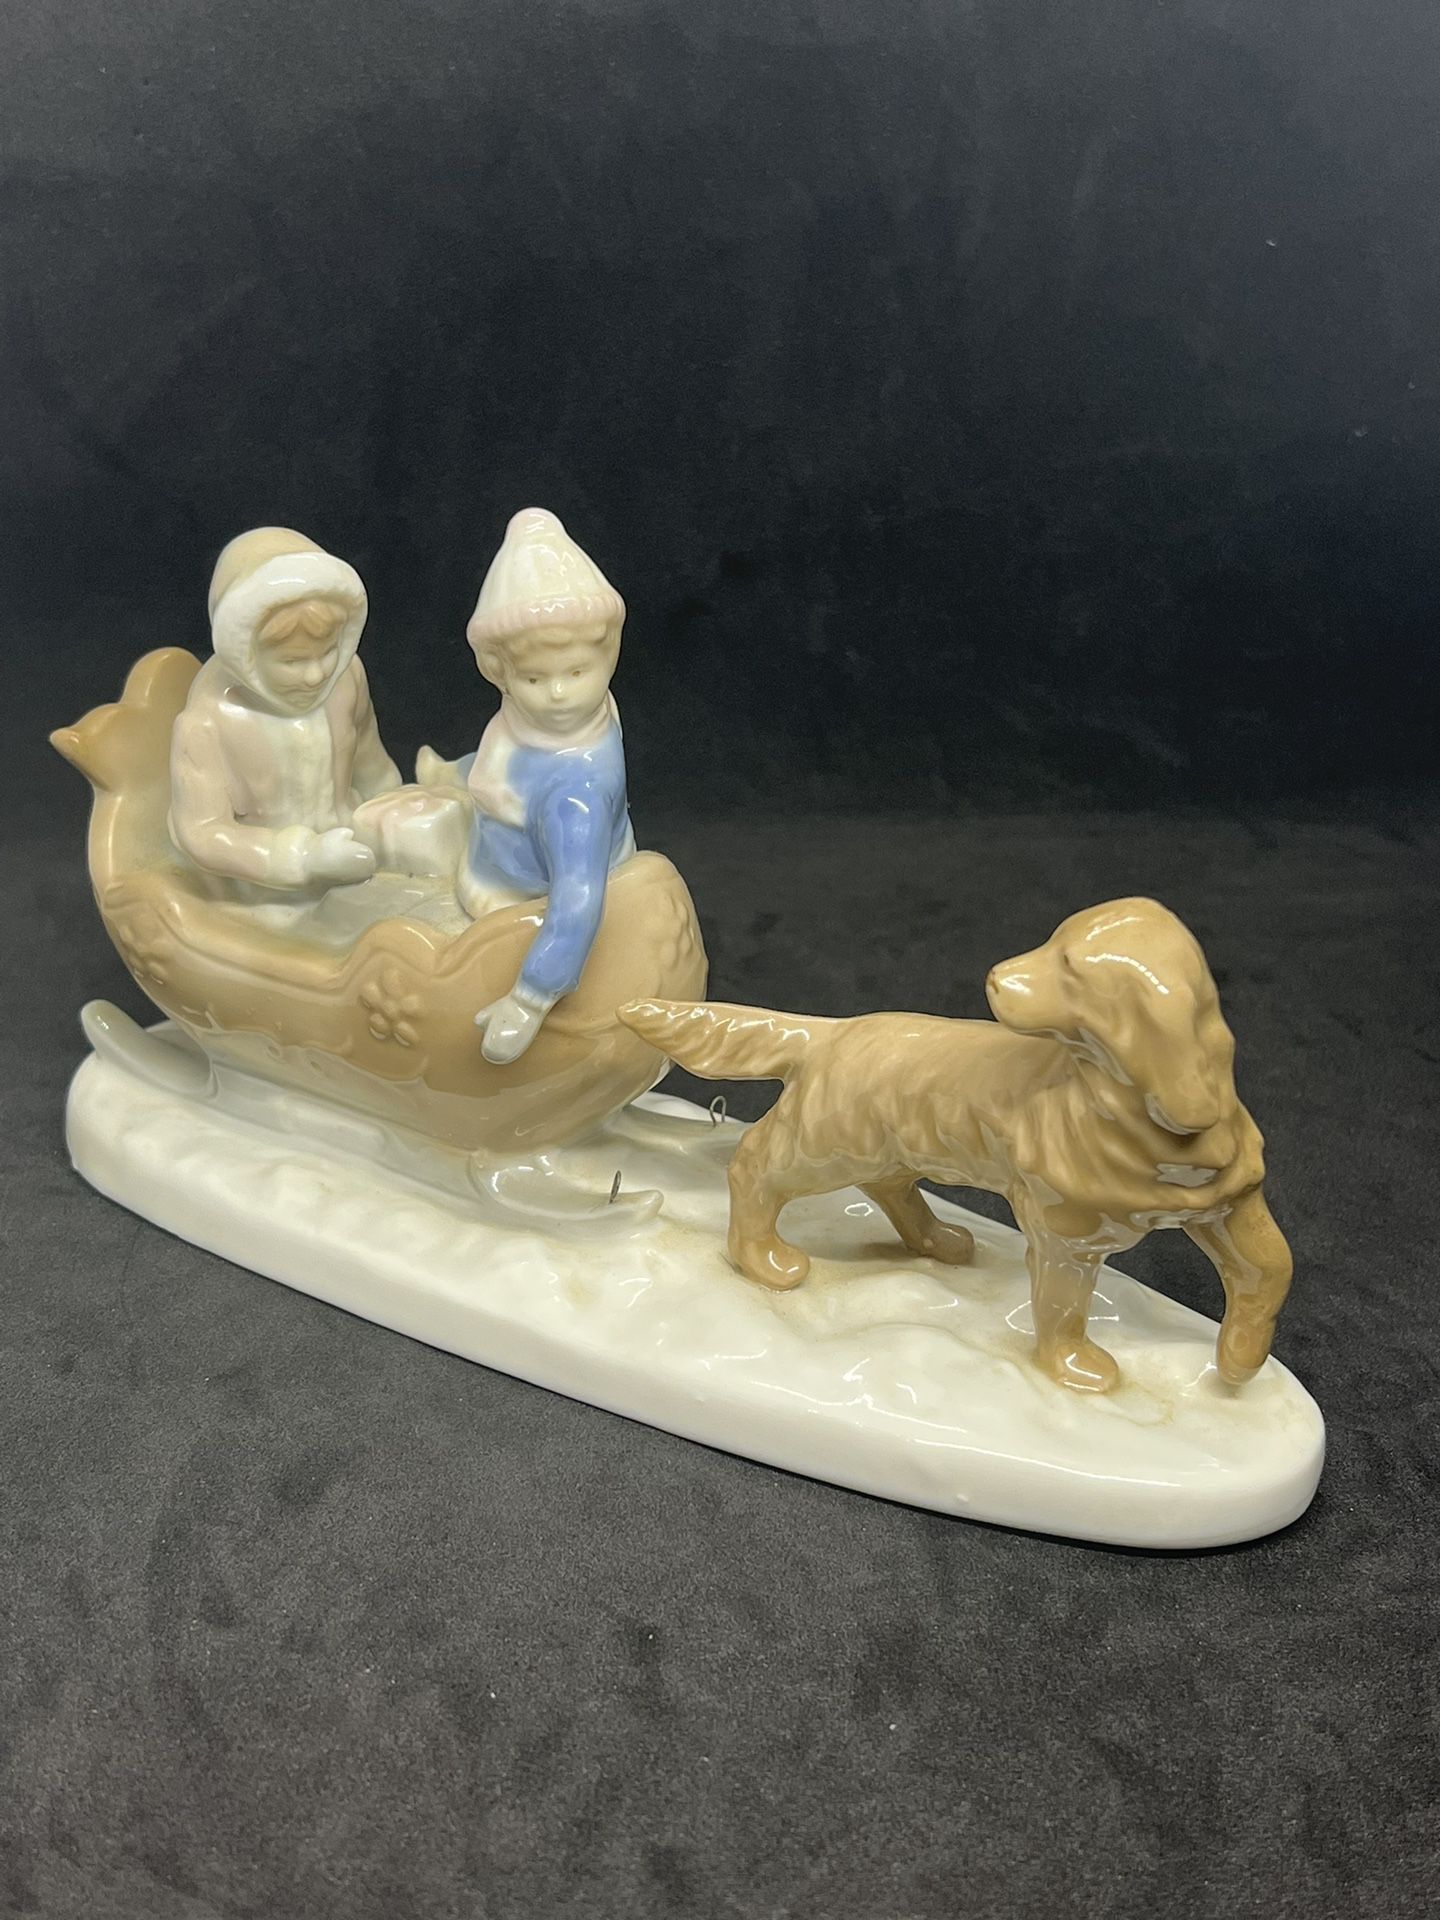 Vintage Paul Sebastian's "Sleigh Ride" by Meico Figurine Children &Dog Christmas